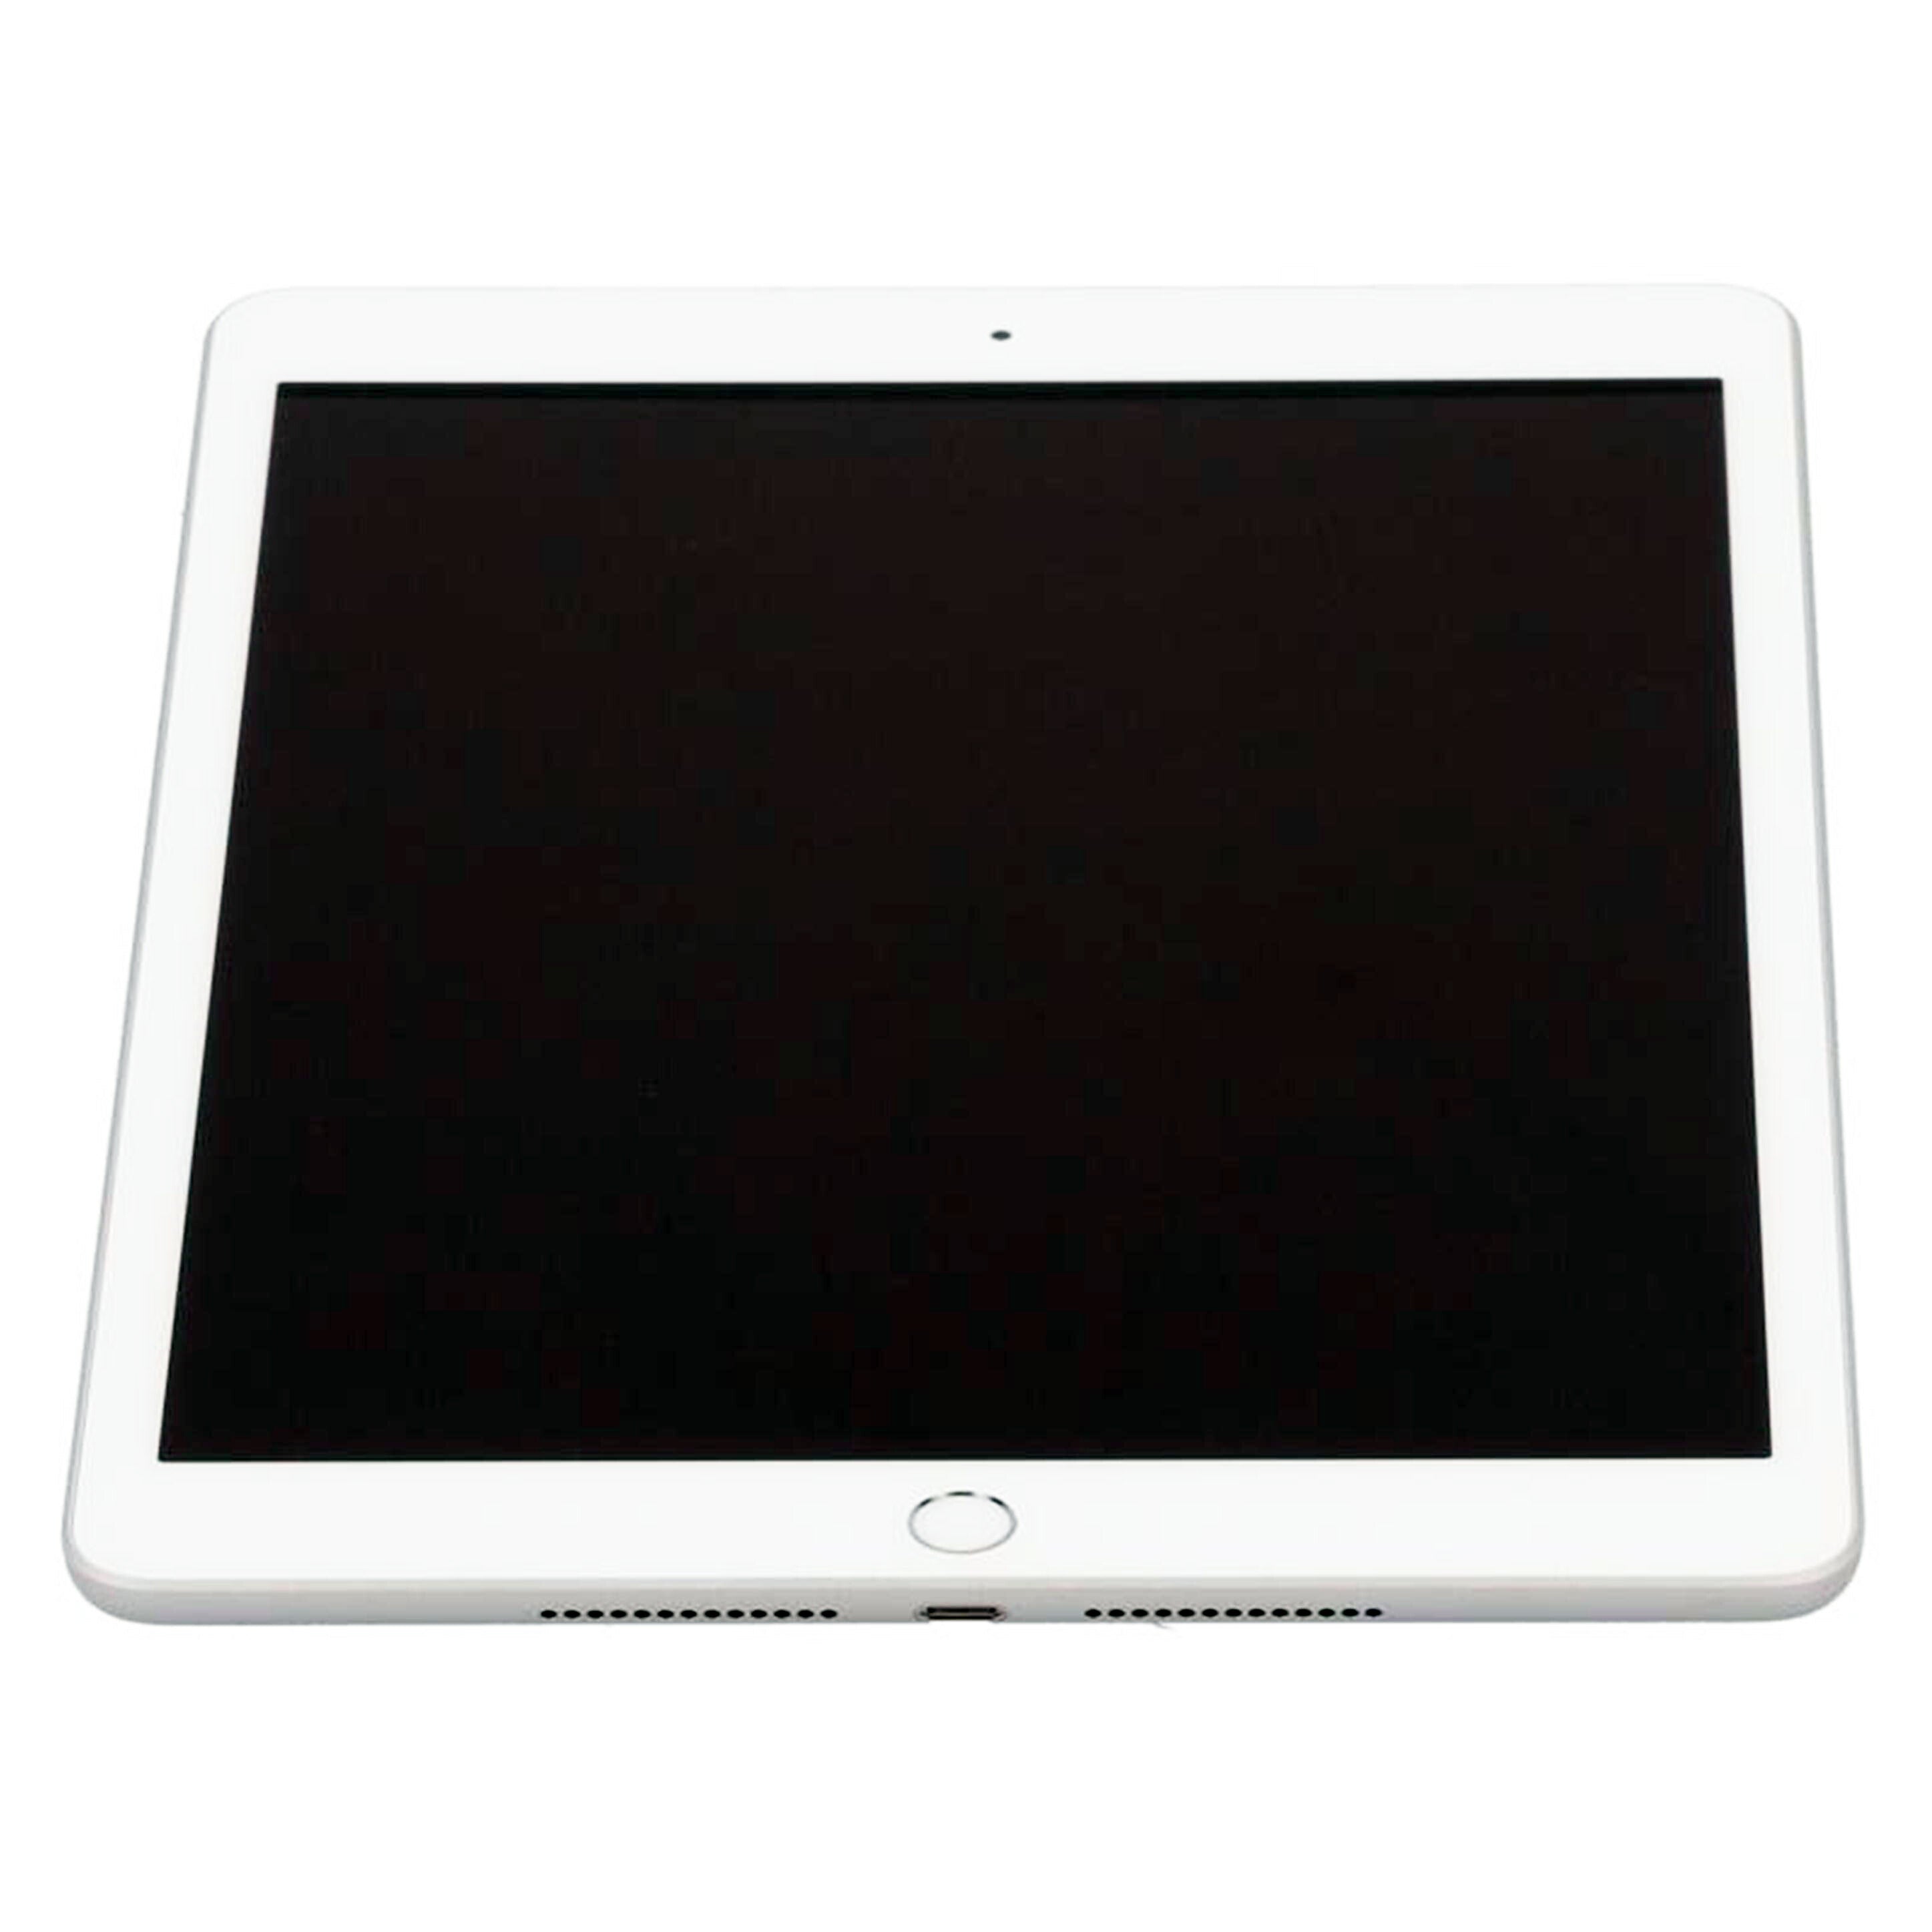 APPLE アップル/iPad第7世代/MW782J/A//DMPCM54BMF3R/Bランク/67